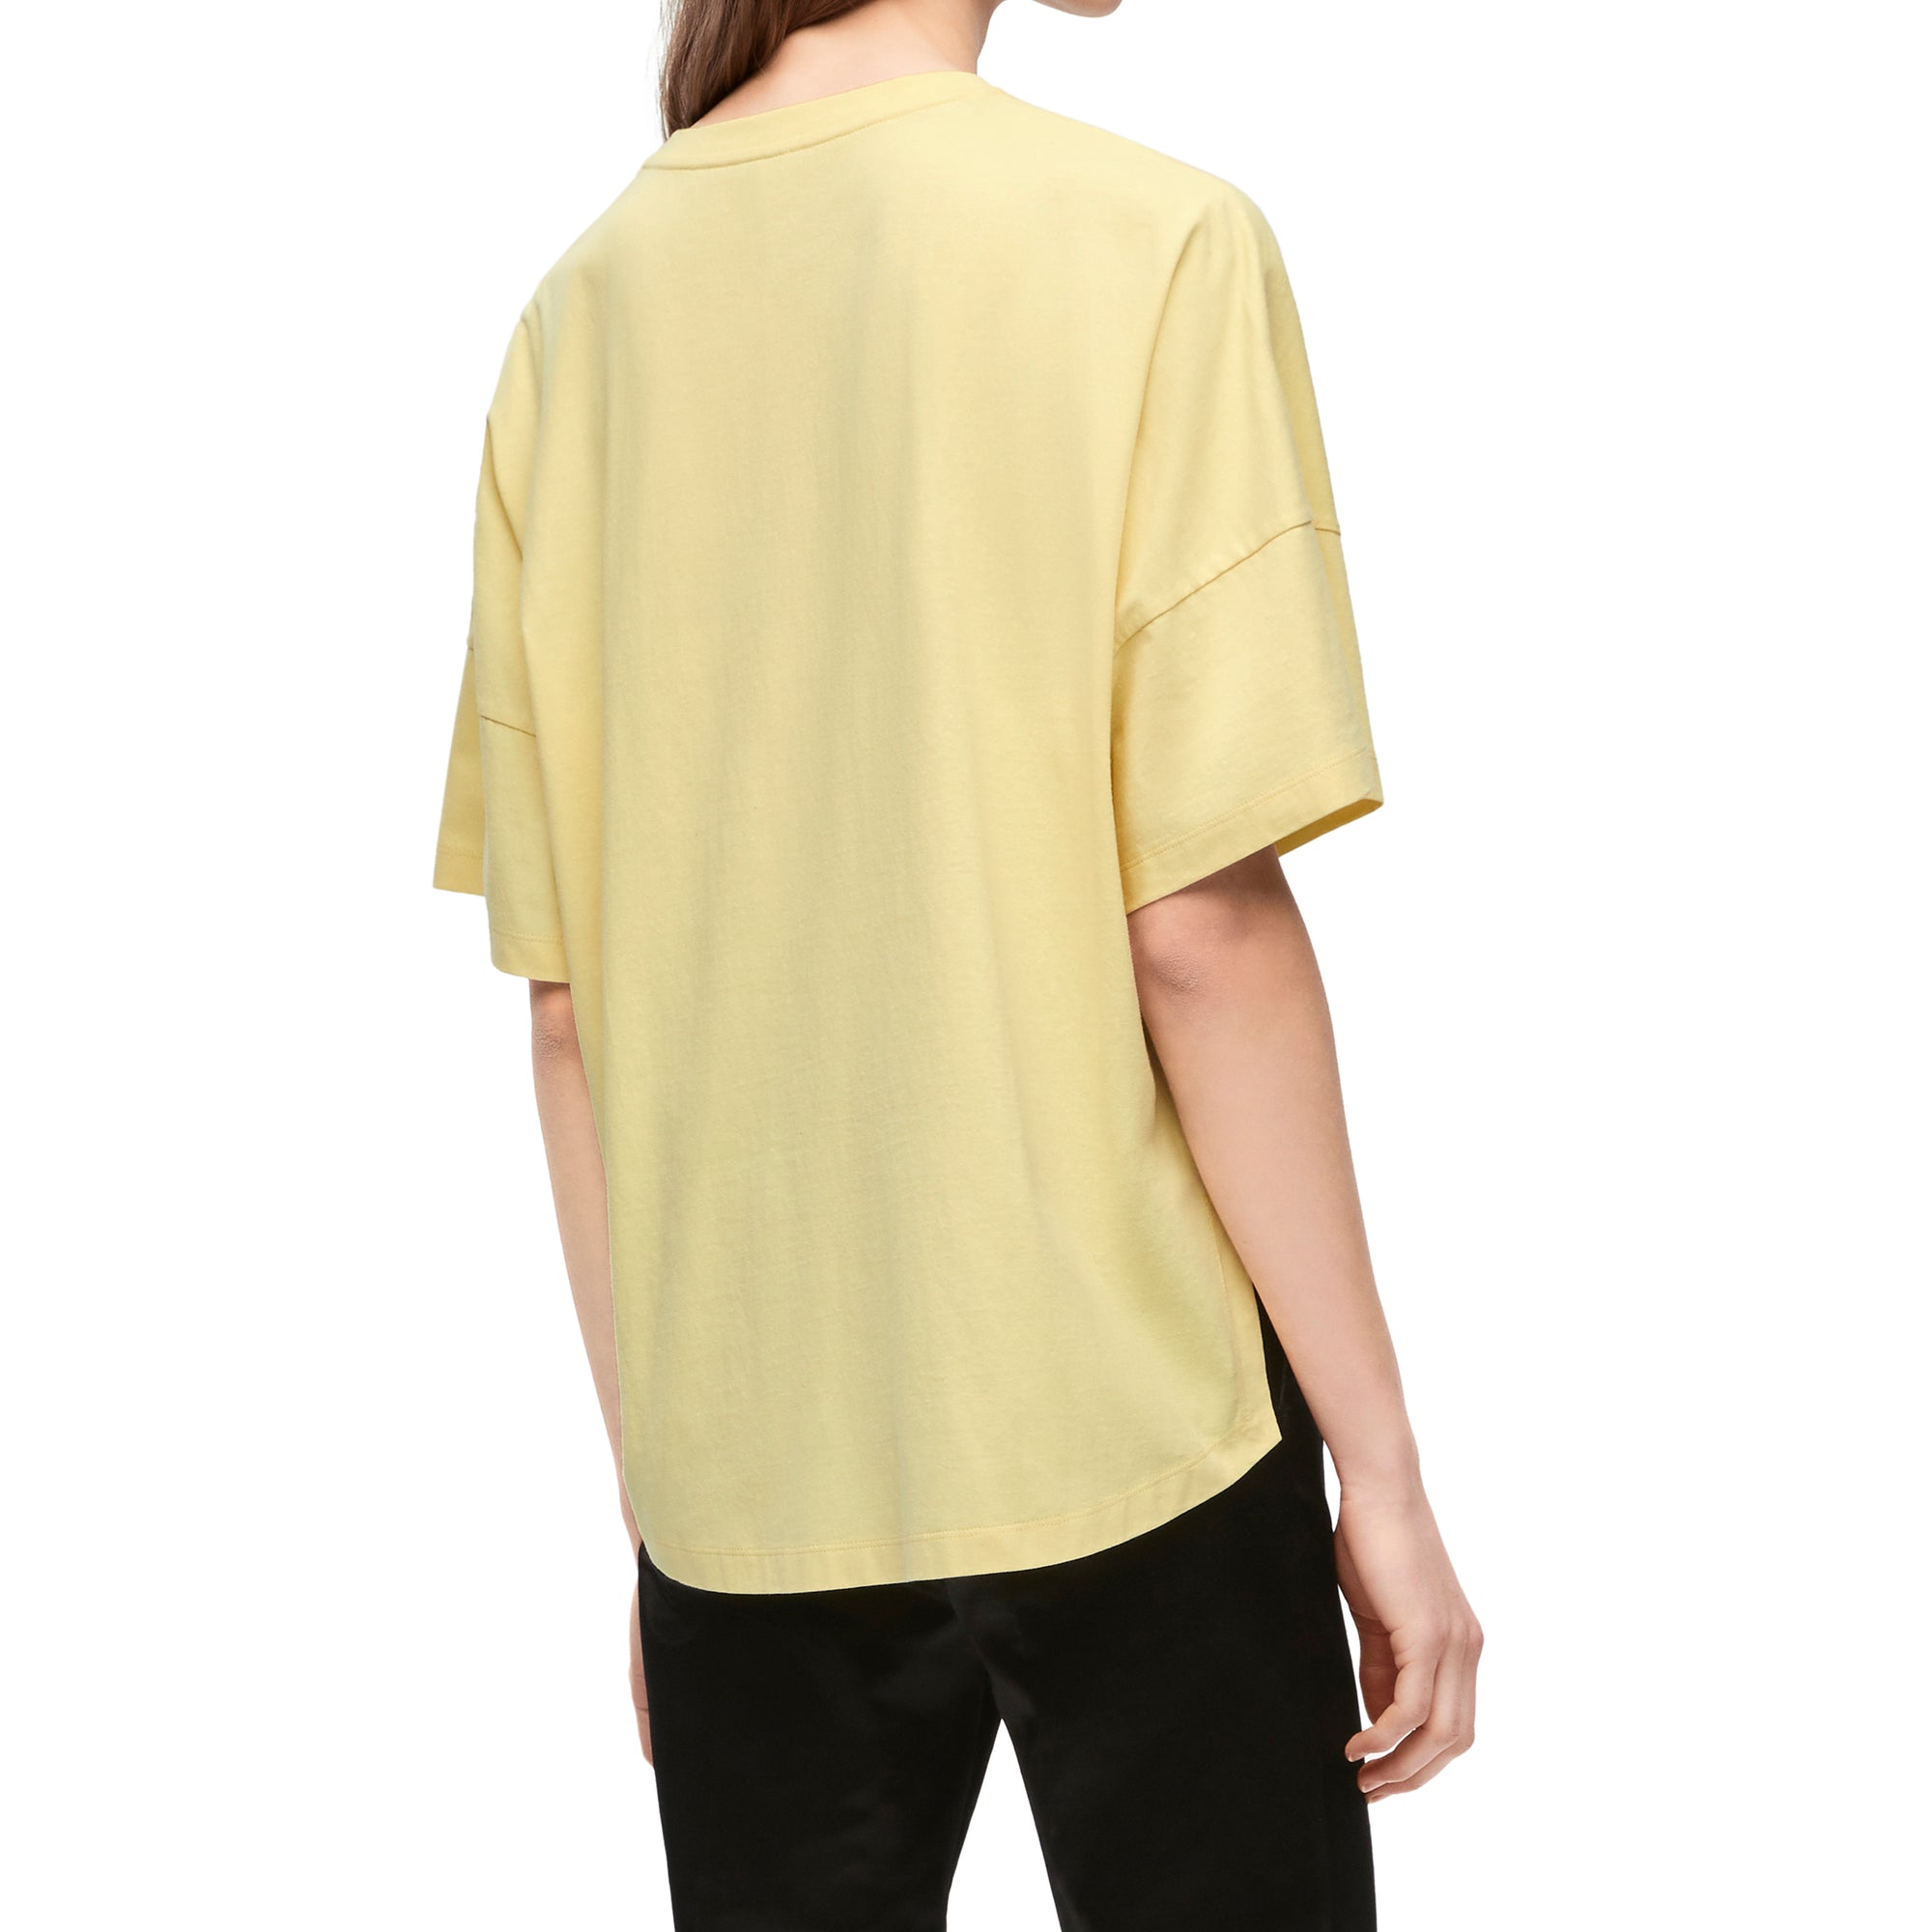 Loewe - Women’s Boxy Fit T-Shirt - (Light Lemon) view 4